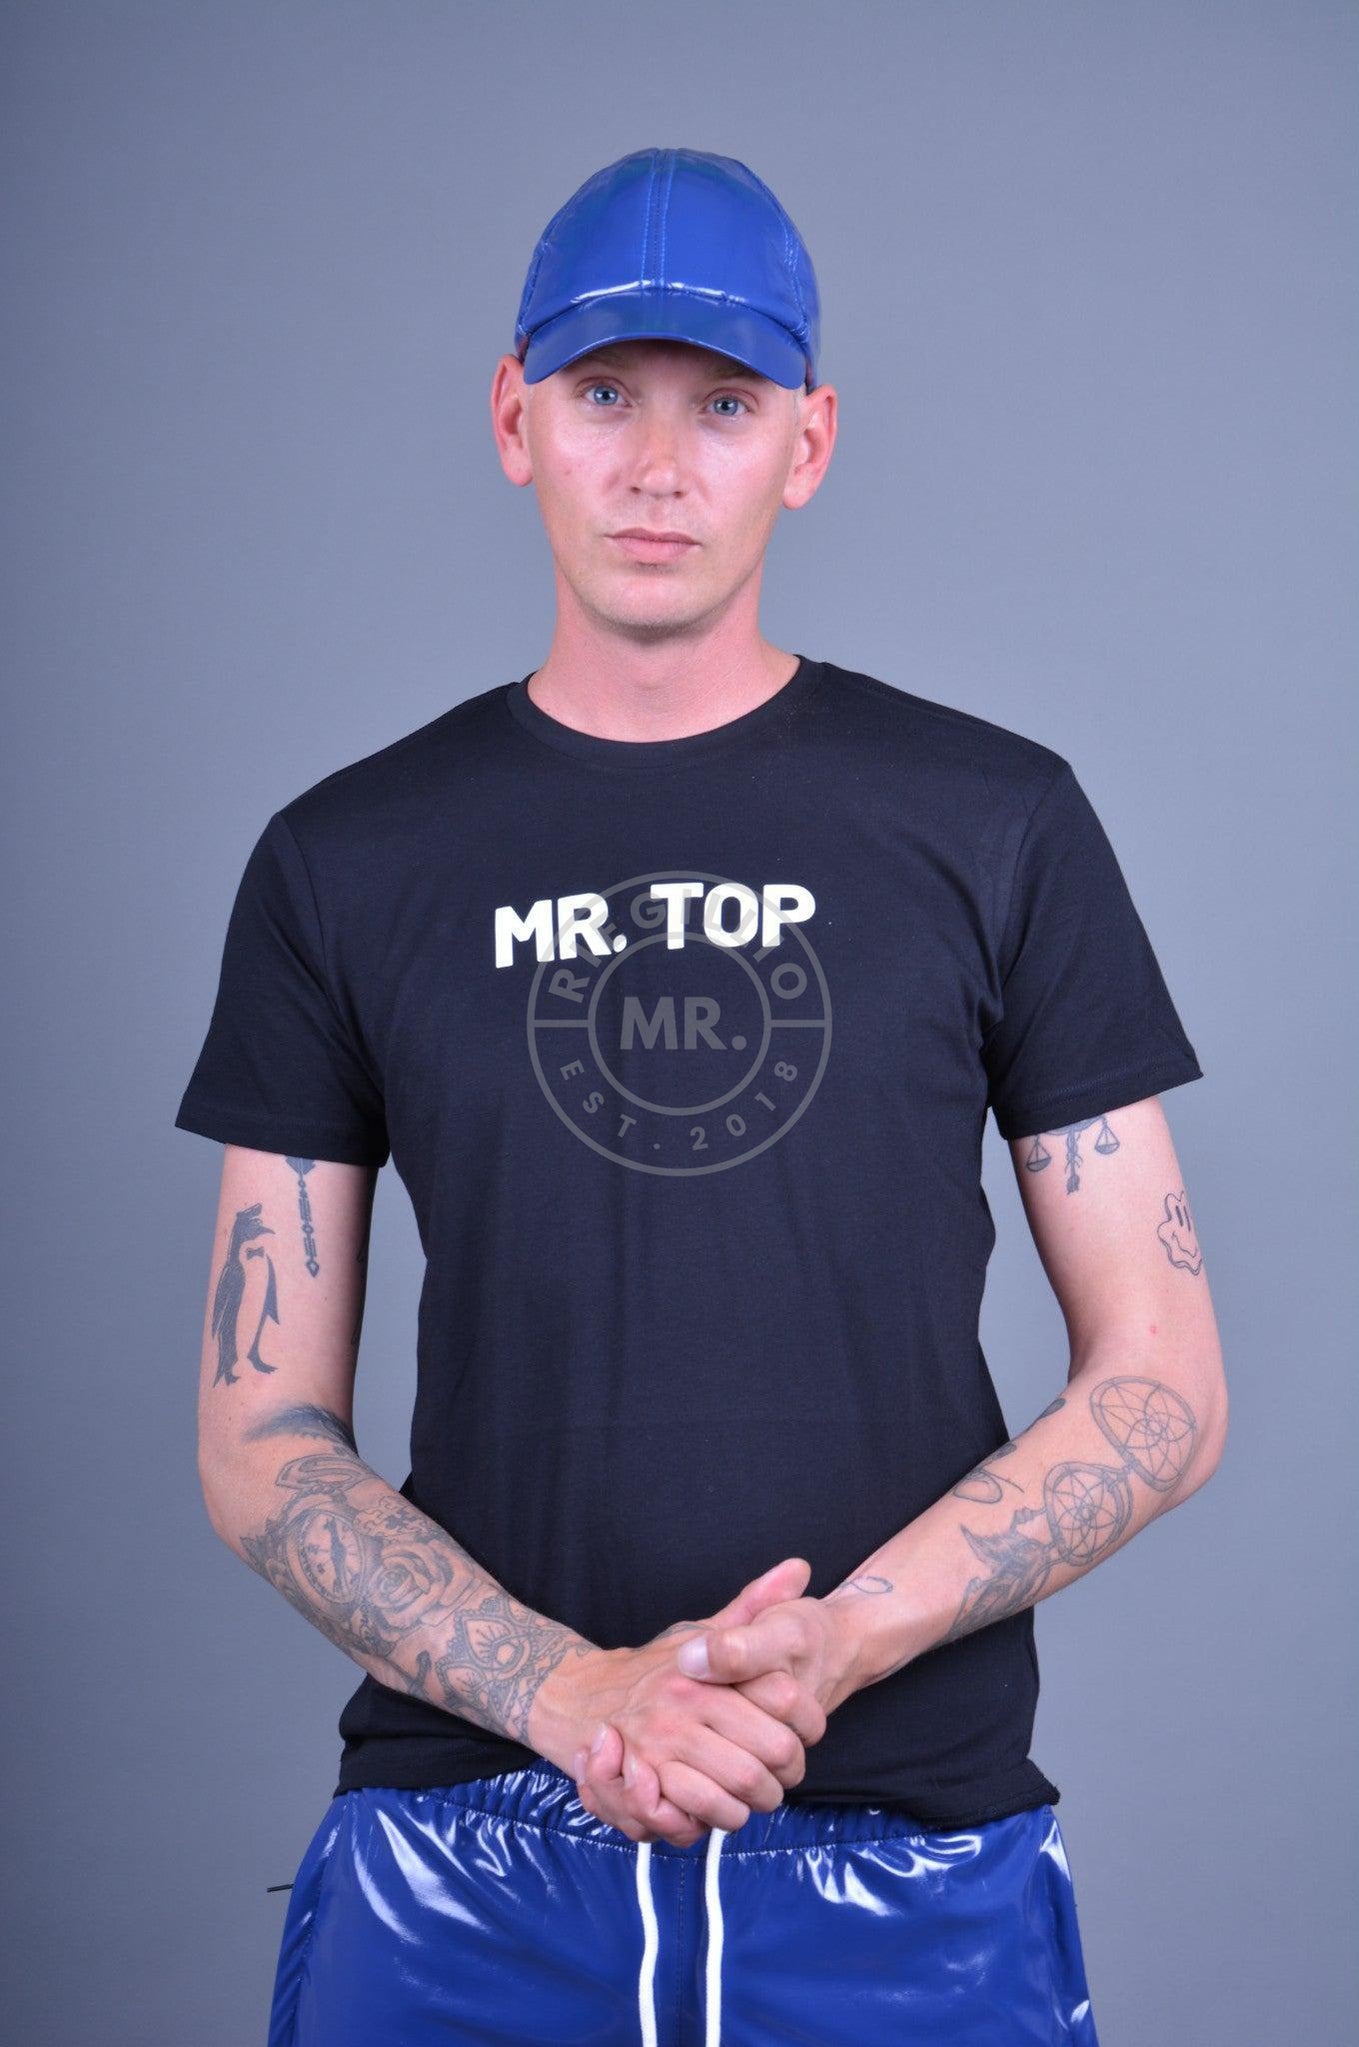 MR. TOP T-Shirt at MR. Riegillio